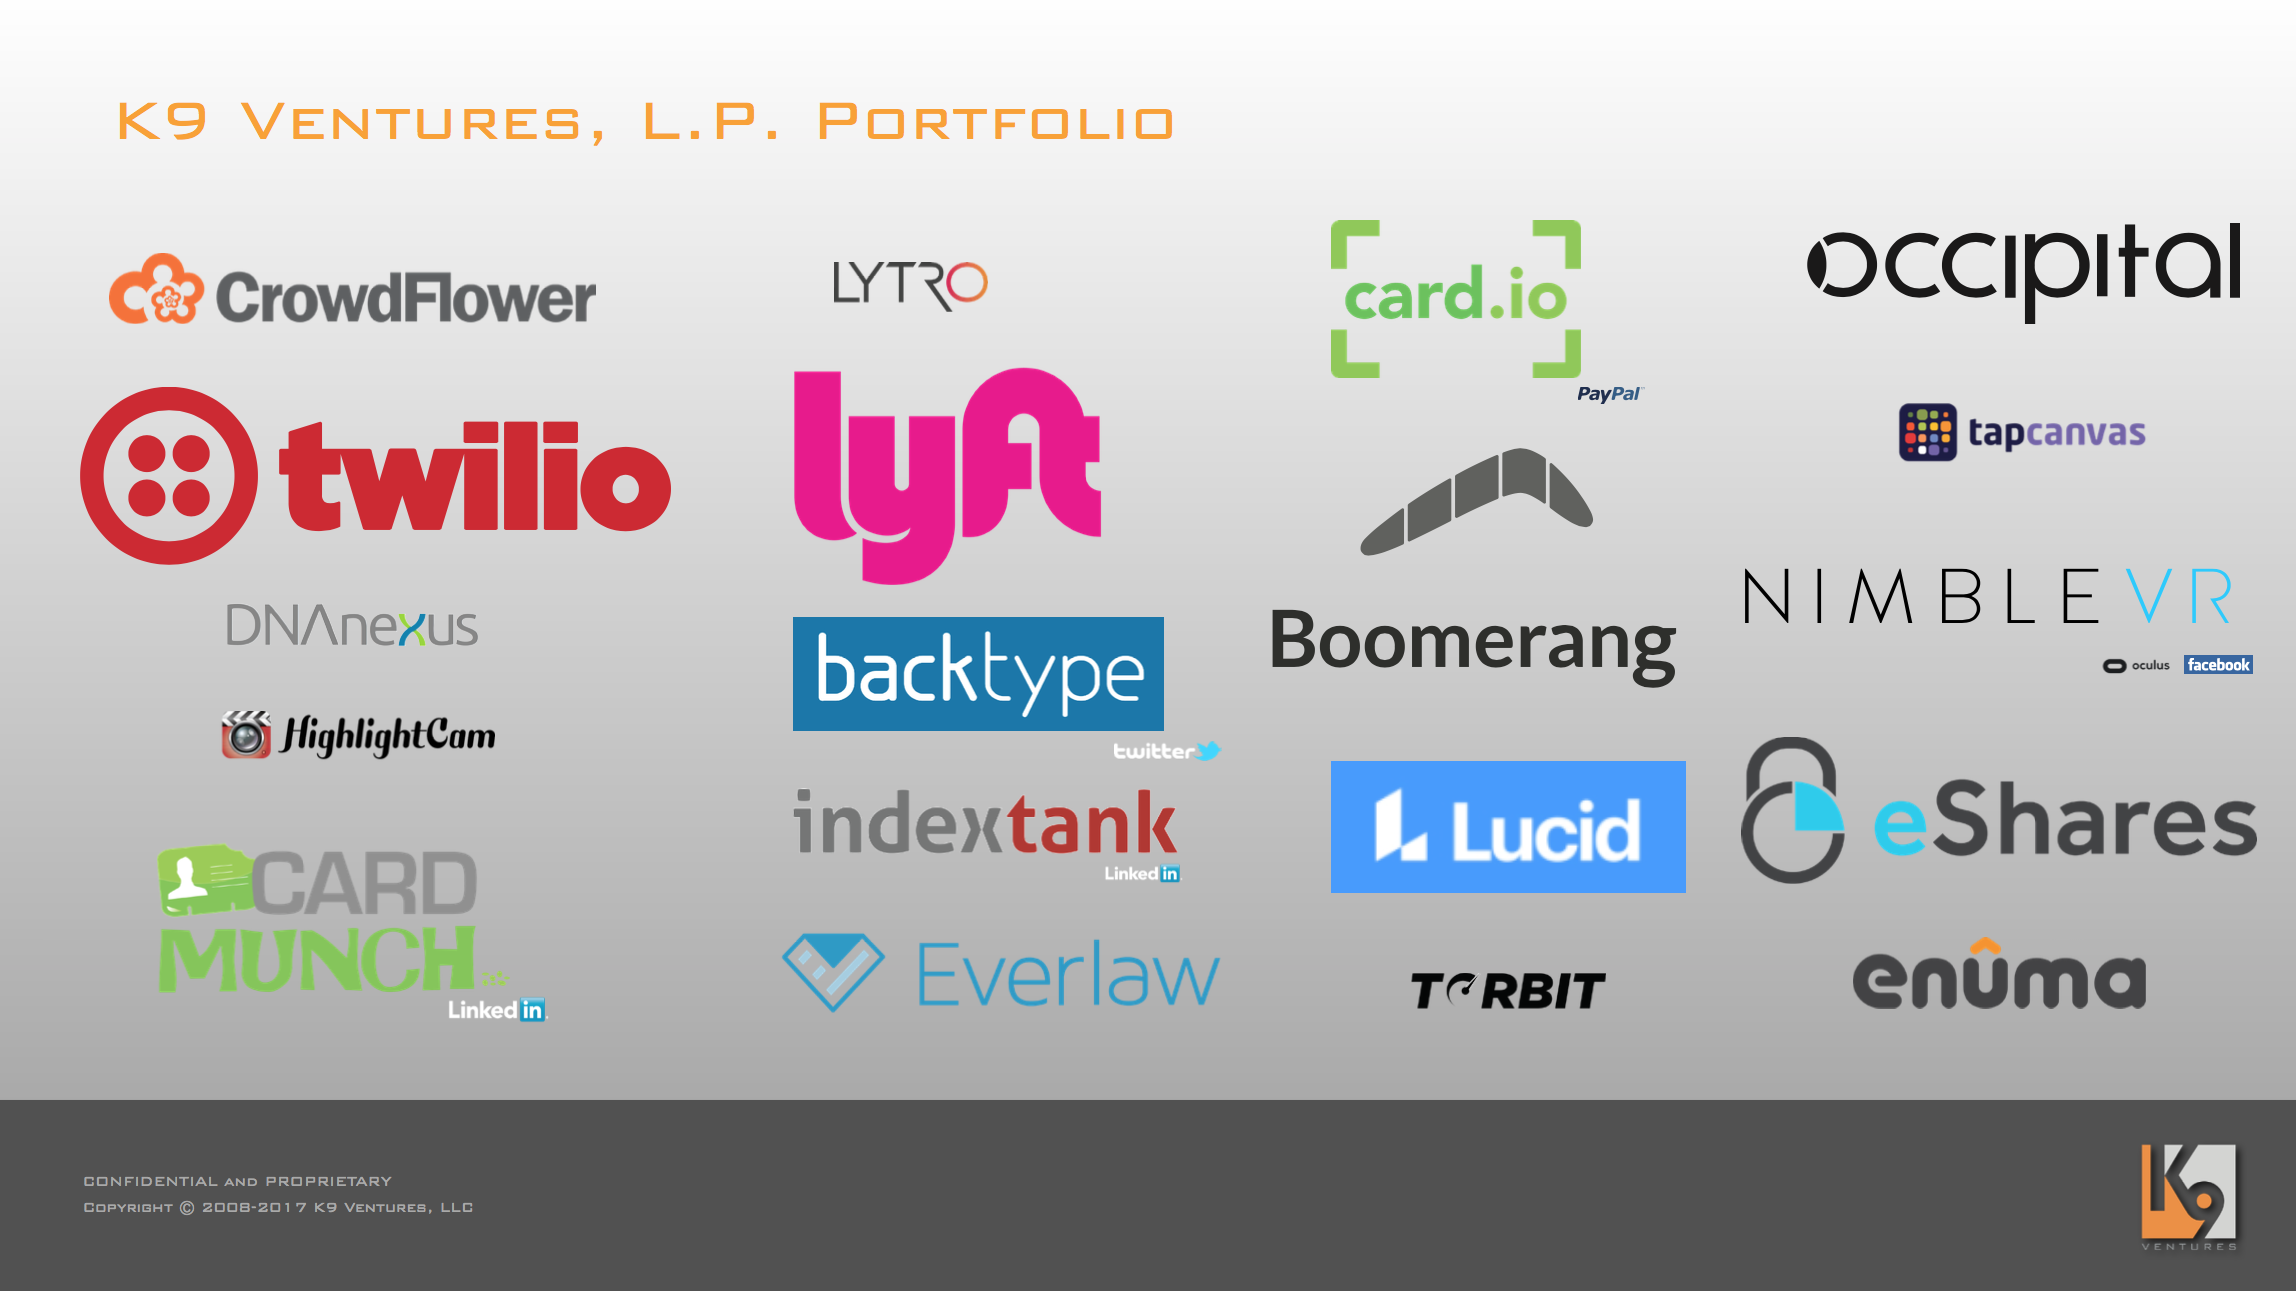 K9 Ventures, L.P. Portfolio Companies: CrowdFlower, Twilio, DNAnexus, HighlightCam, CardMunch, Lytro, Lyft, BackType, IndexTank, Everlaw, card.io, Boomerang, Lucid Software, Torbit, Occipital, TapCanvas, NimbleVR, eShares, Enuma